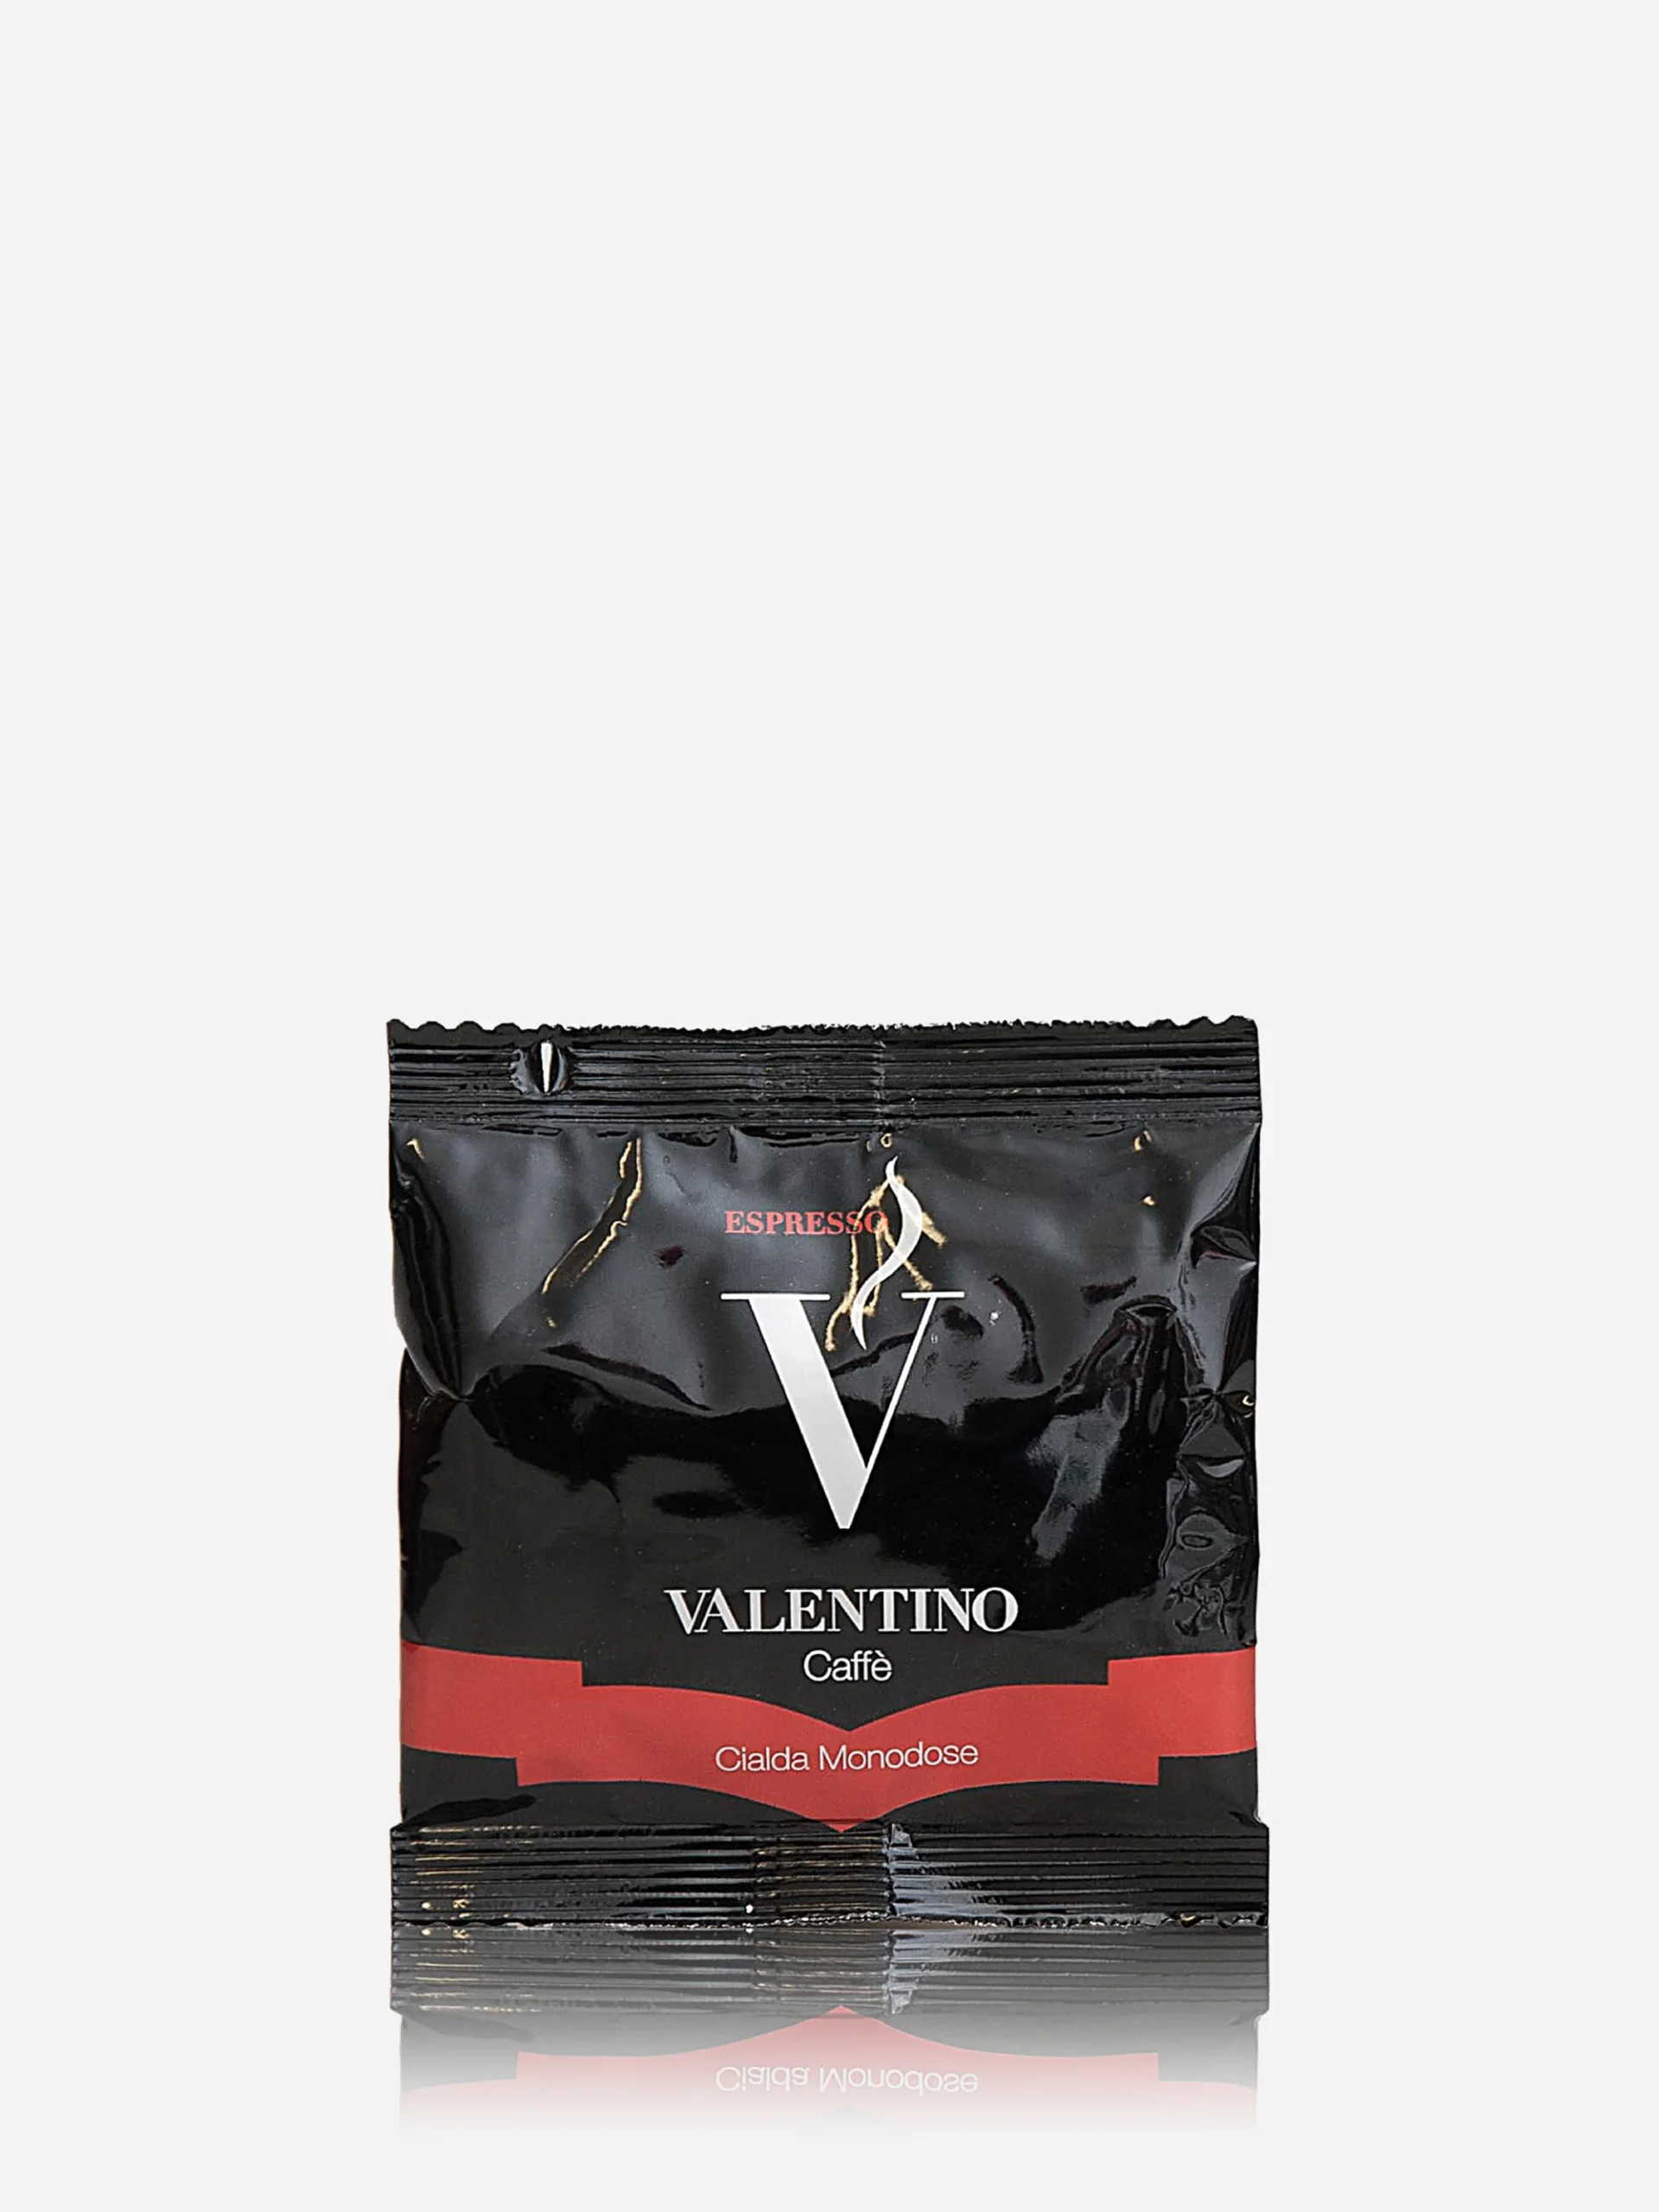 Valentino Caffè Espresso Monodose